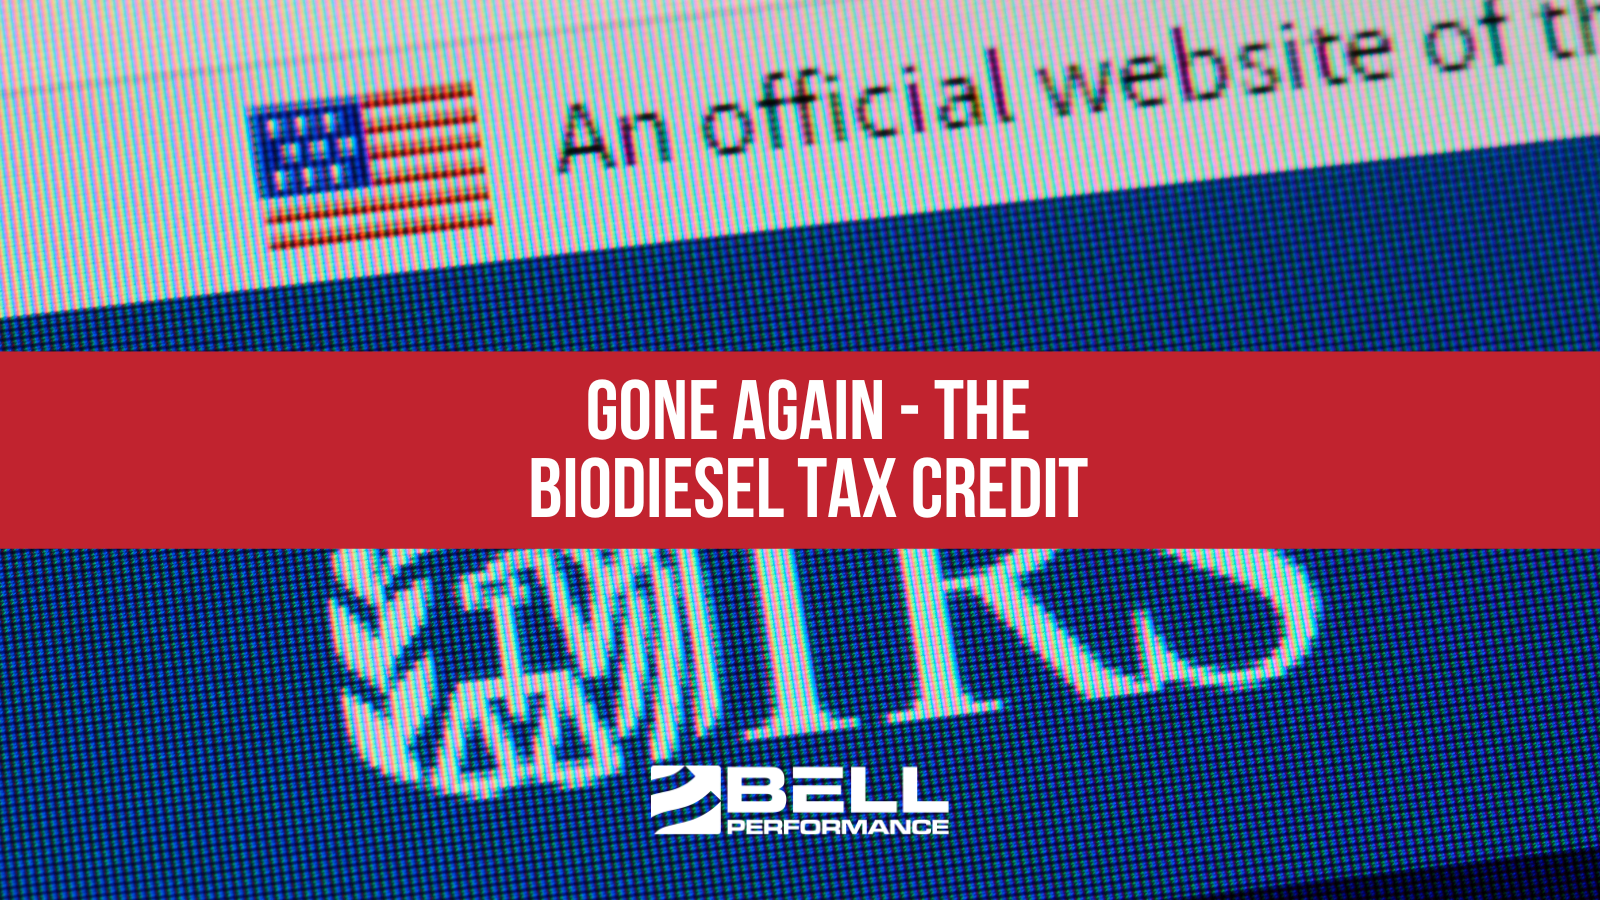 Gone again - the biodiesel tax credit